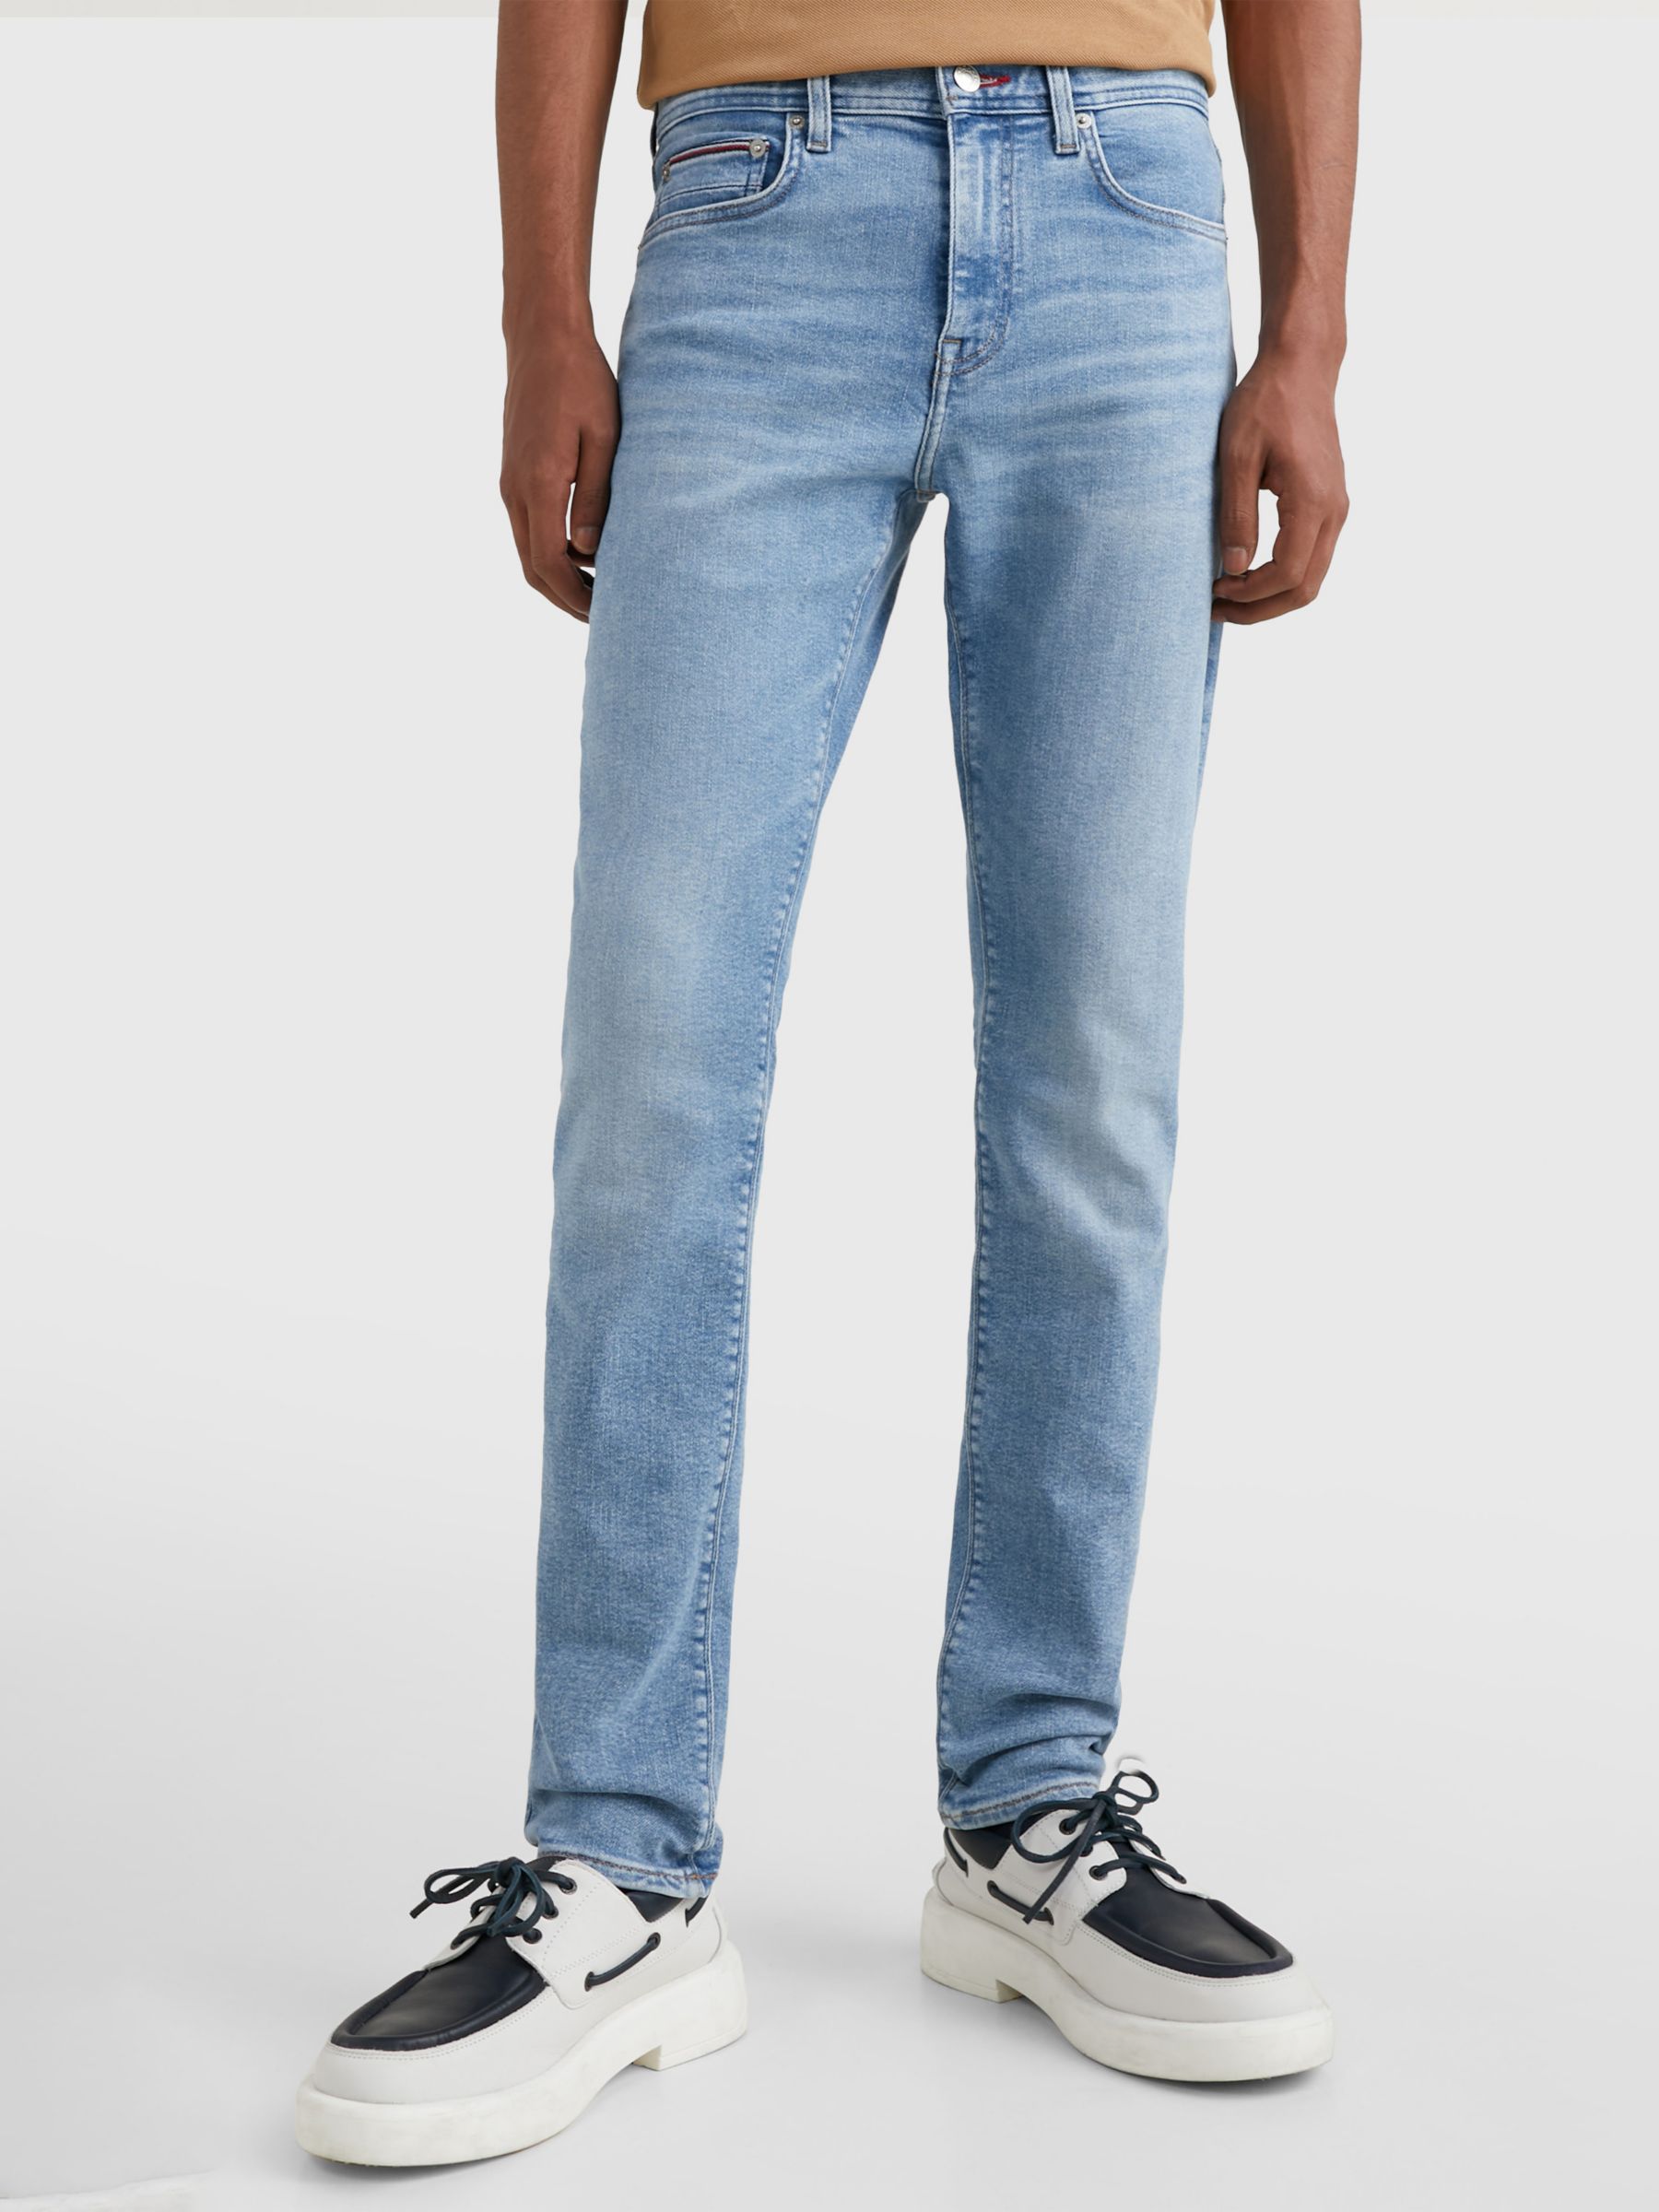 Tommy Hilfiger Extra Slim Layton Jeans, Blue, 36L